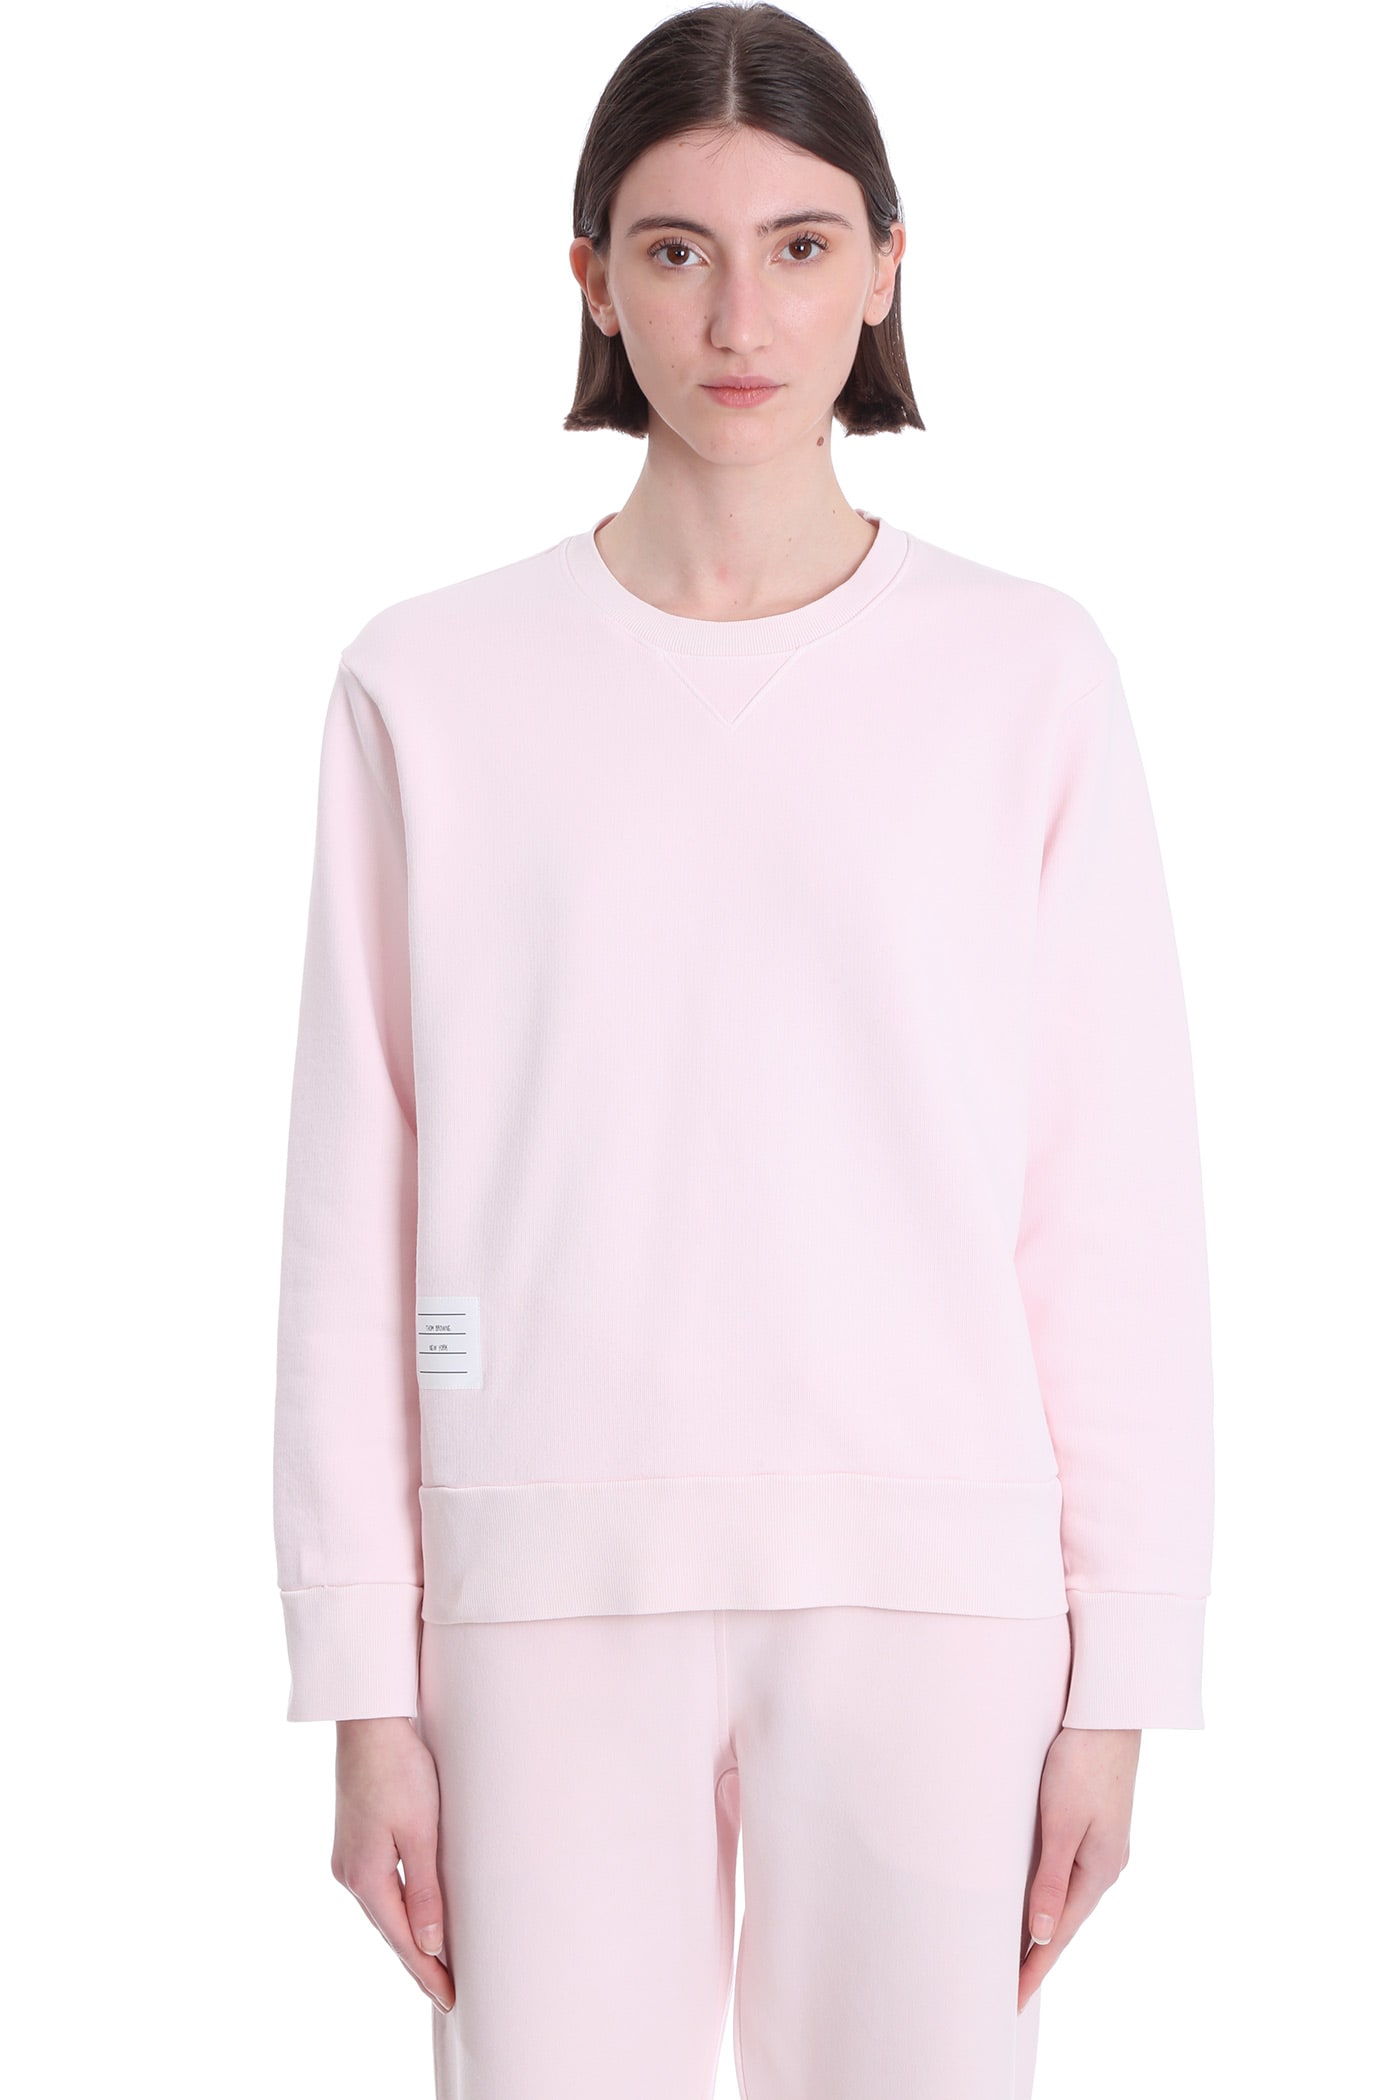 Thom Browne Sweatshirt In Rose-pink Cotton